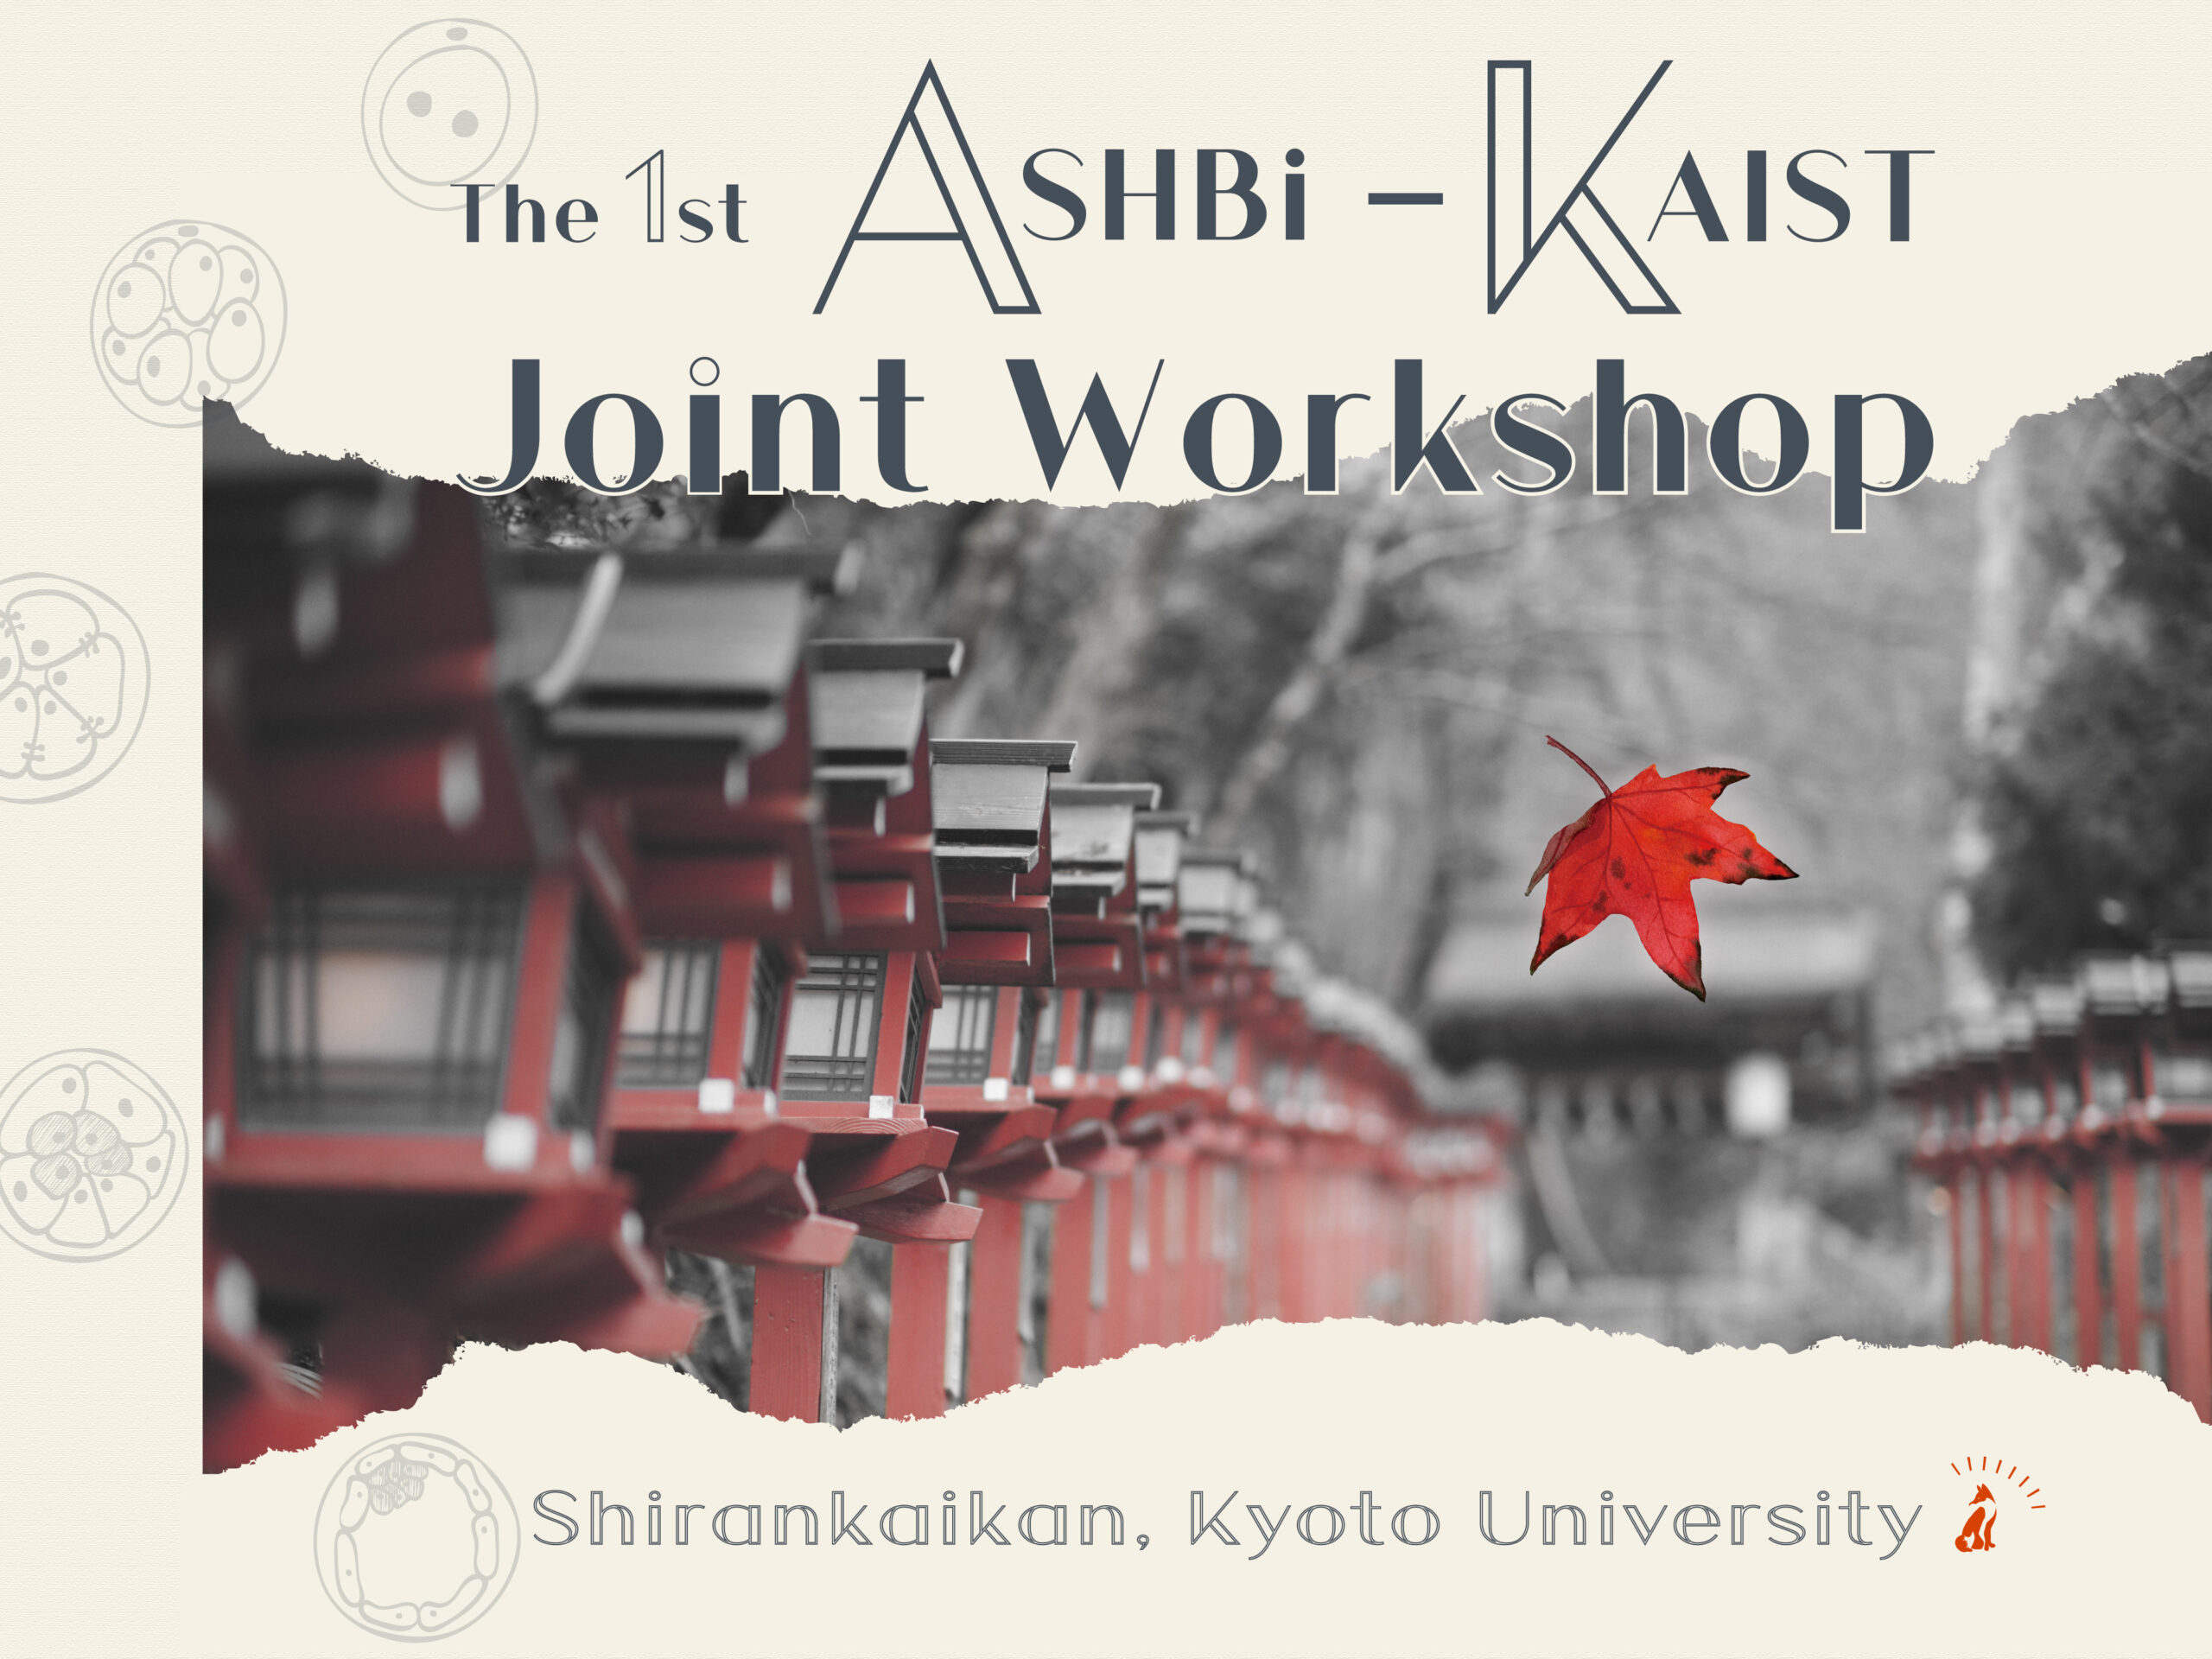 Registration Open▶ The 1st ASHBi-KAIST Joint Workshop on Oct 3-5